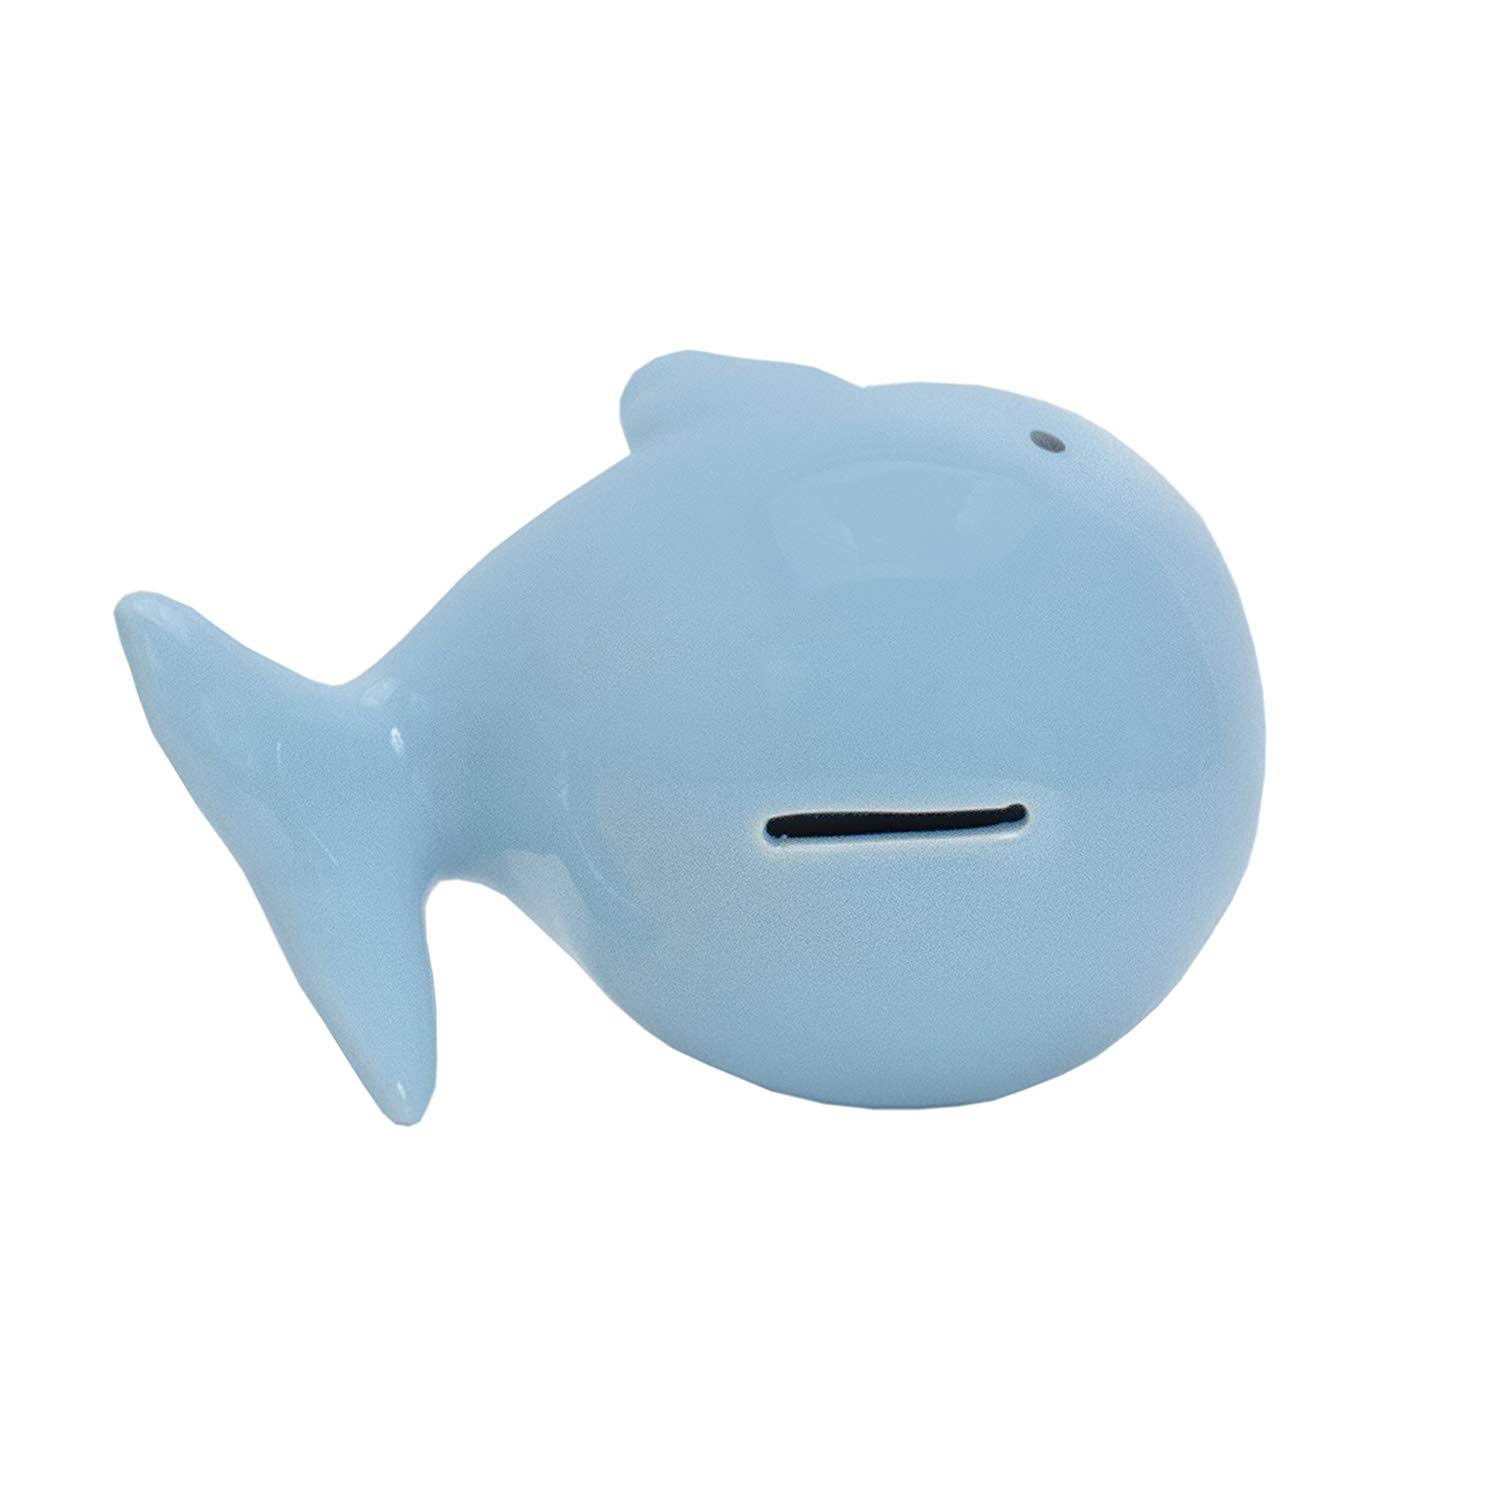 Child to Cherish Boys' Ceramic Piggy Bank - Blue, Whale